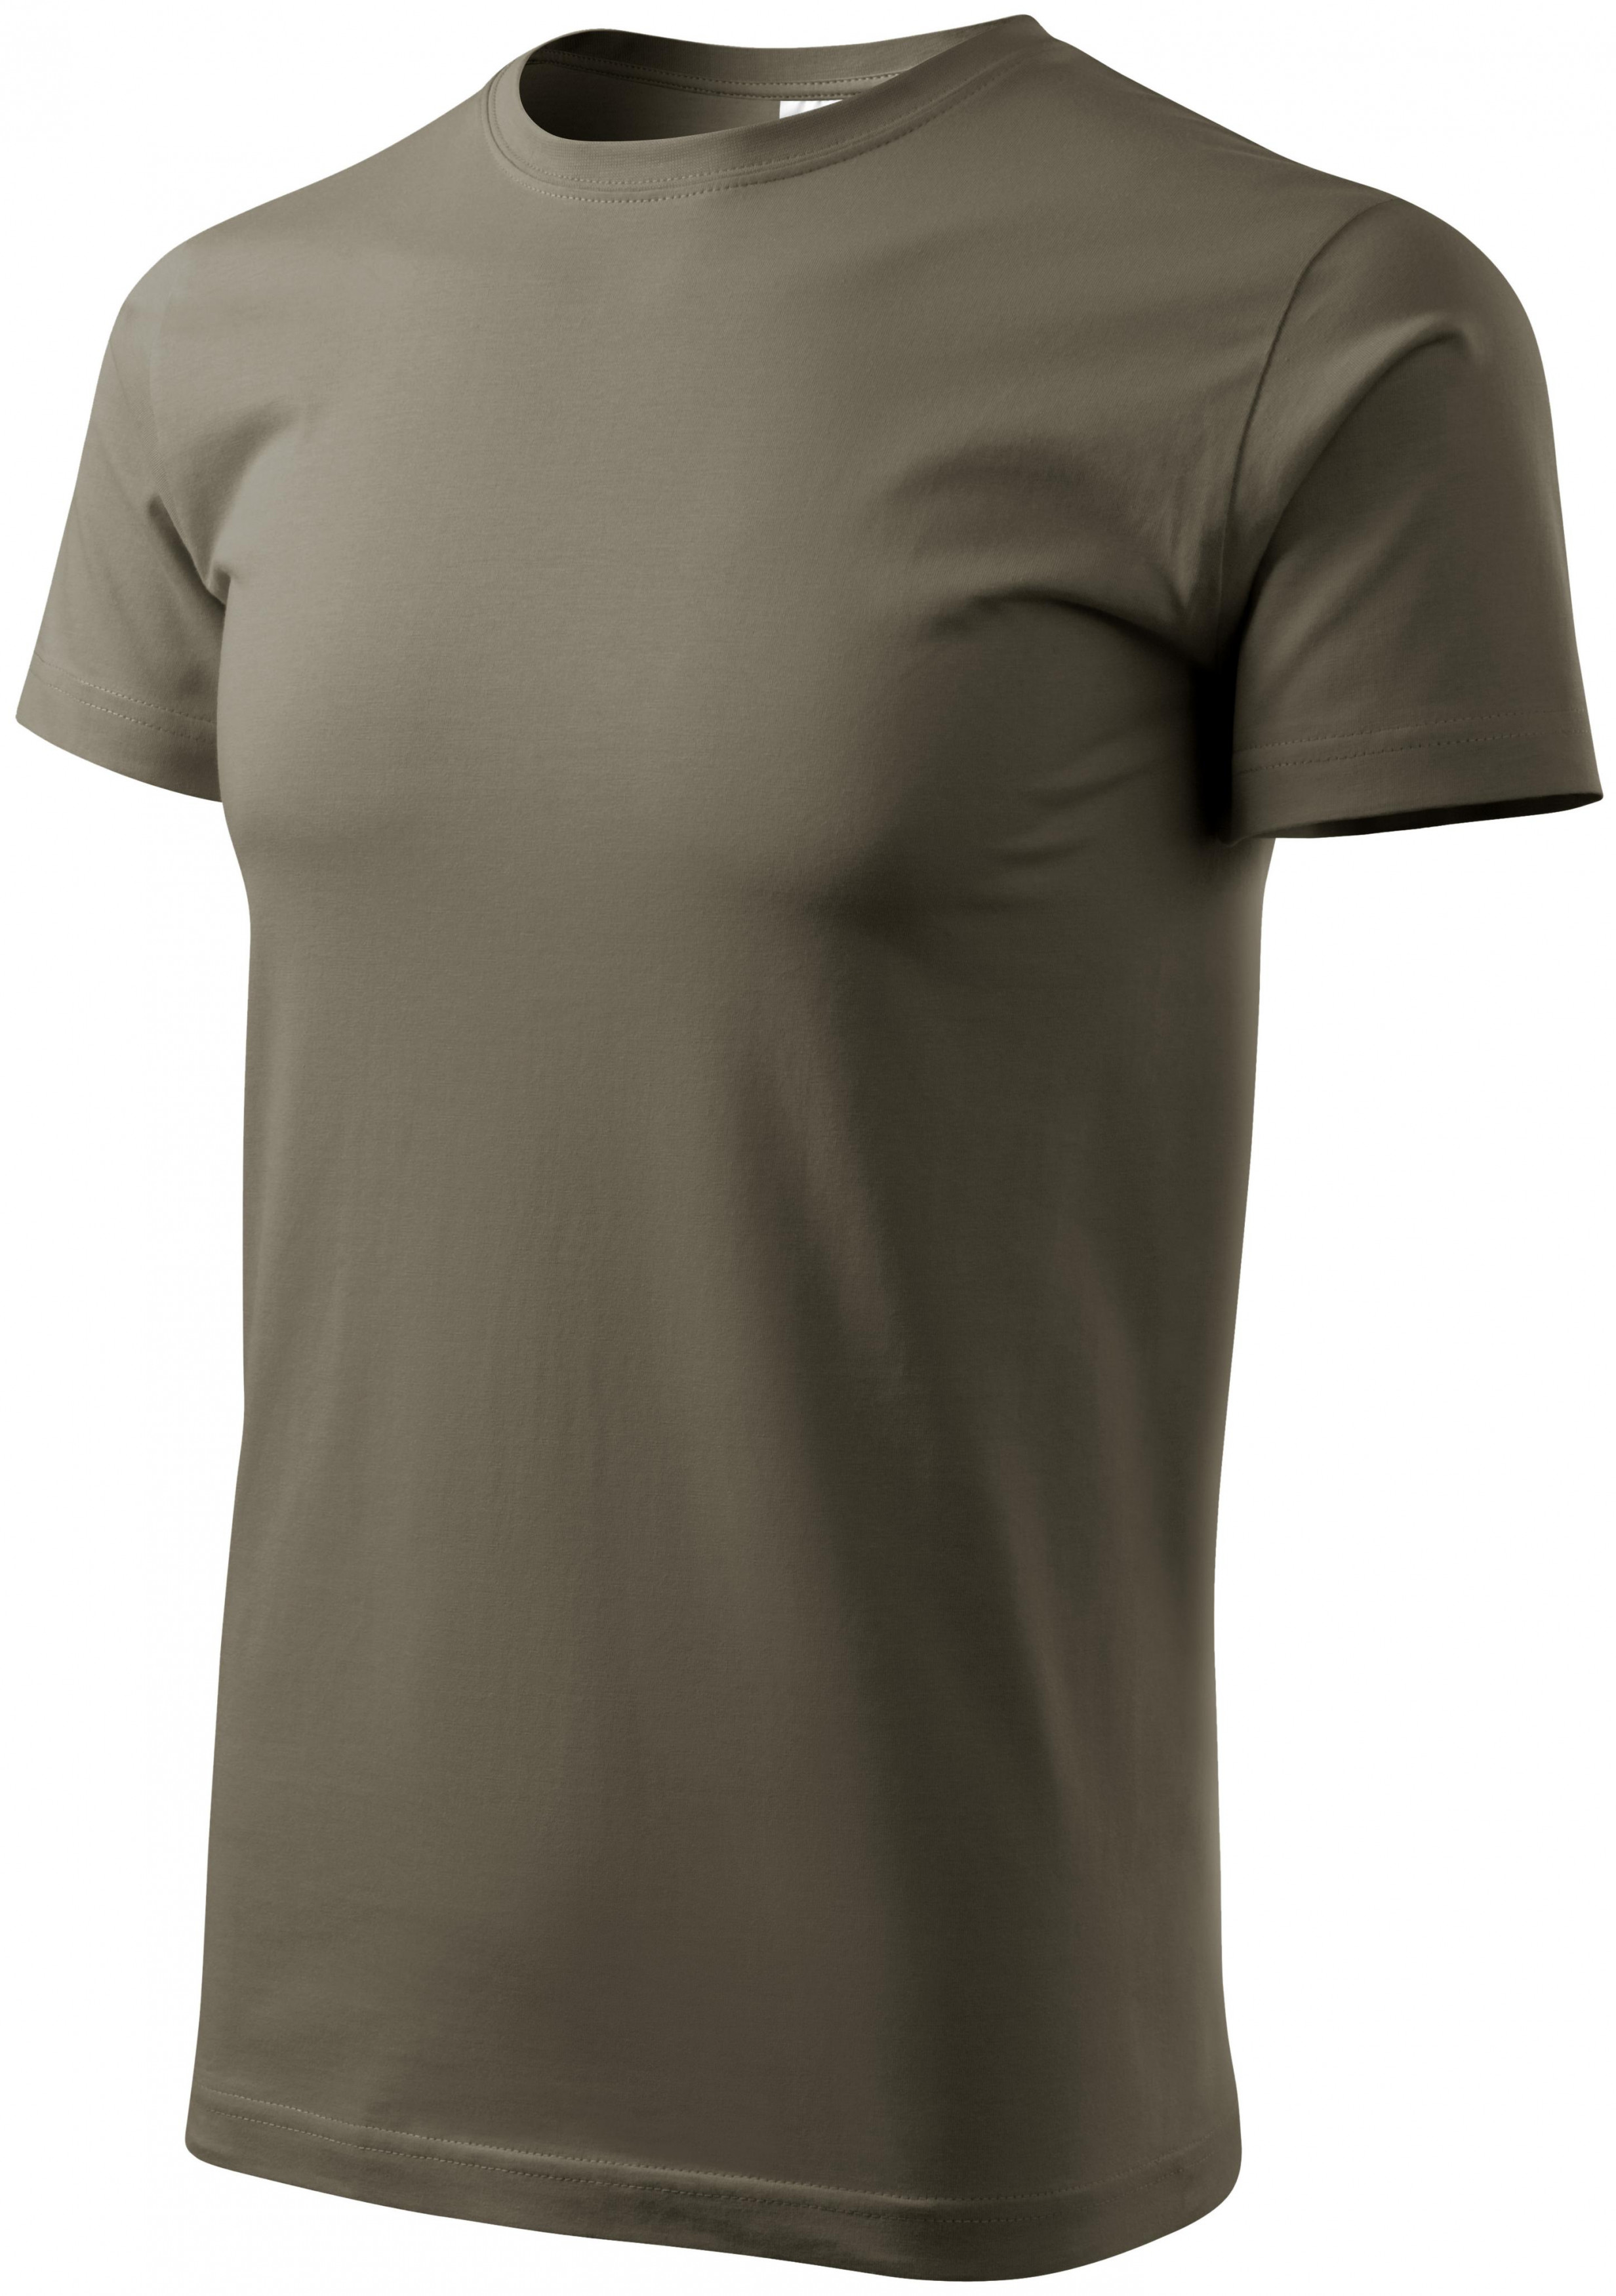 Pánske tričko jednoduché, army, XL